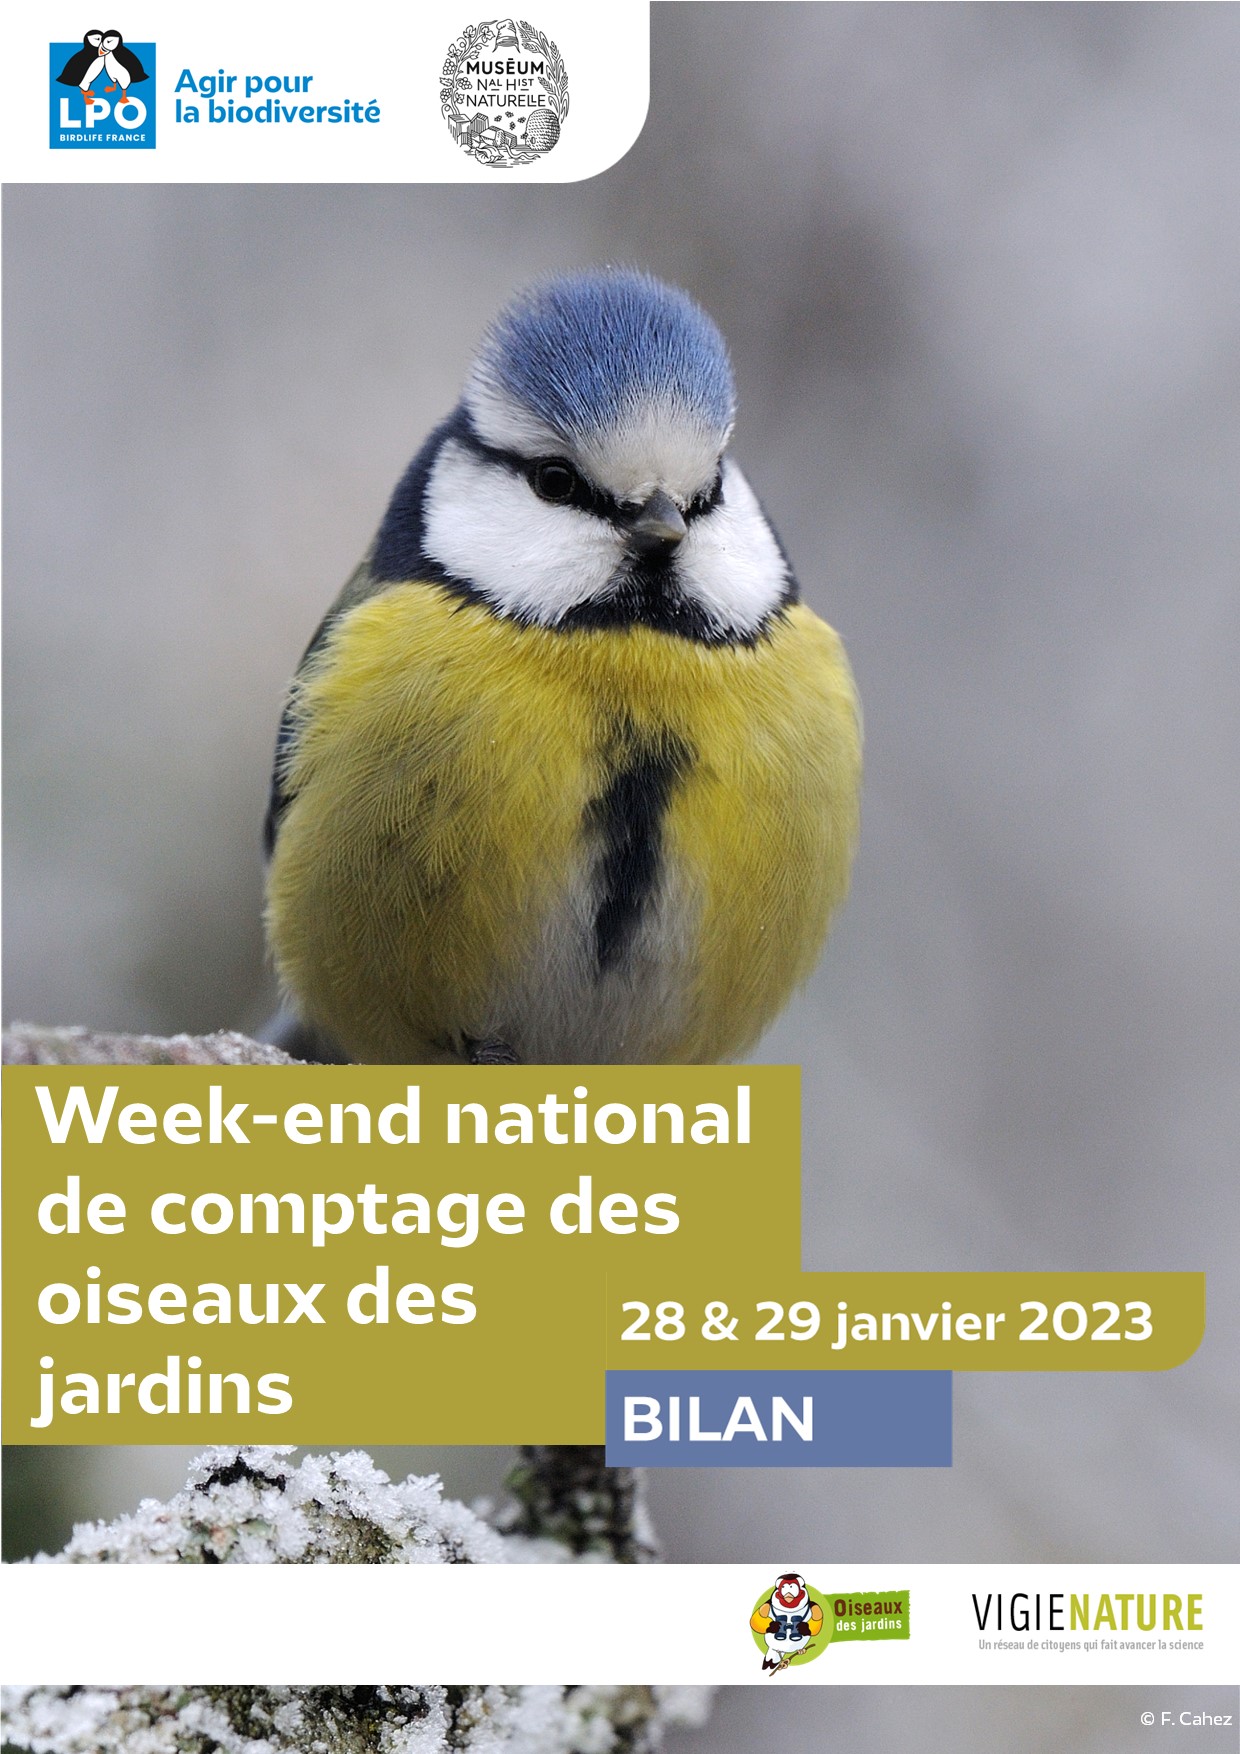 https://cdnfiles1.biolovision.net/www.oiseauxdesjardins.fr/userfiles/Bilancomptagejanvier2023VF.jpg